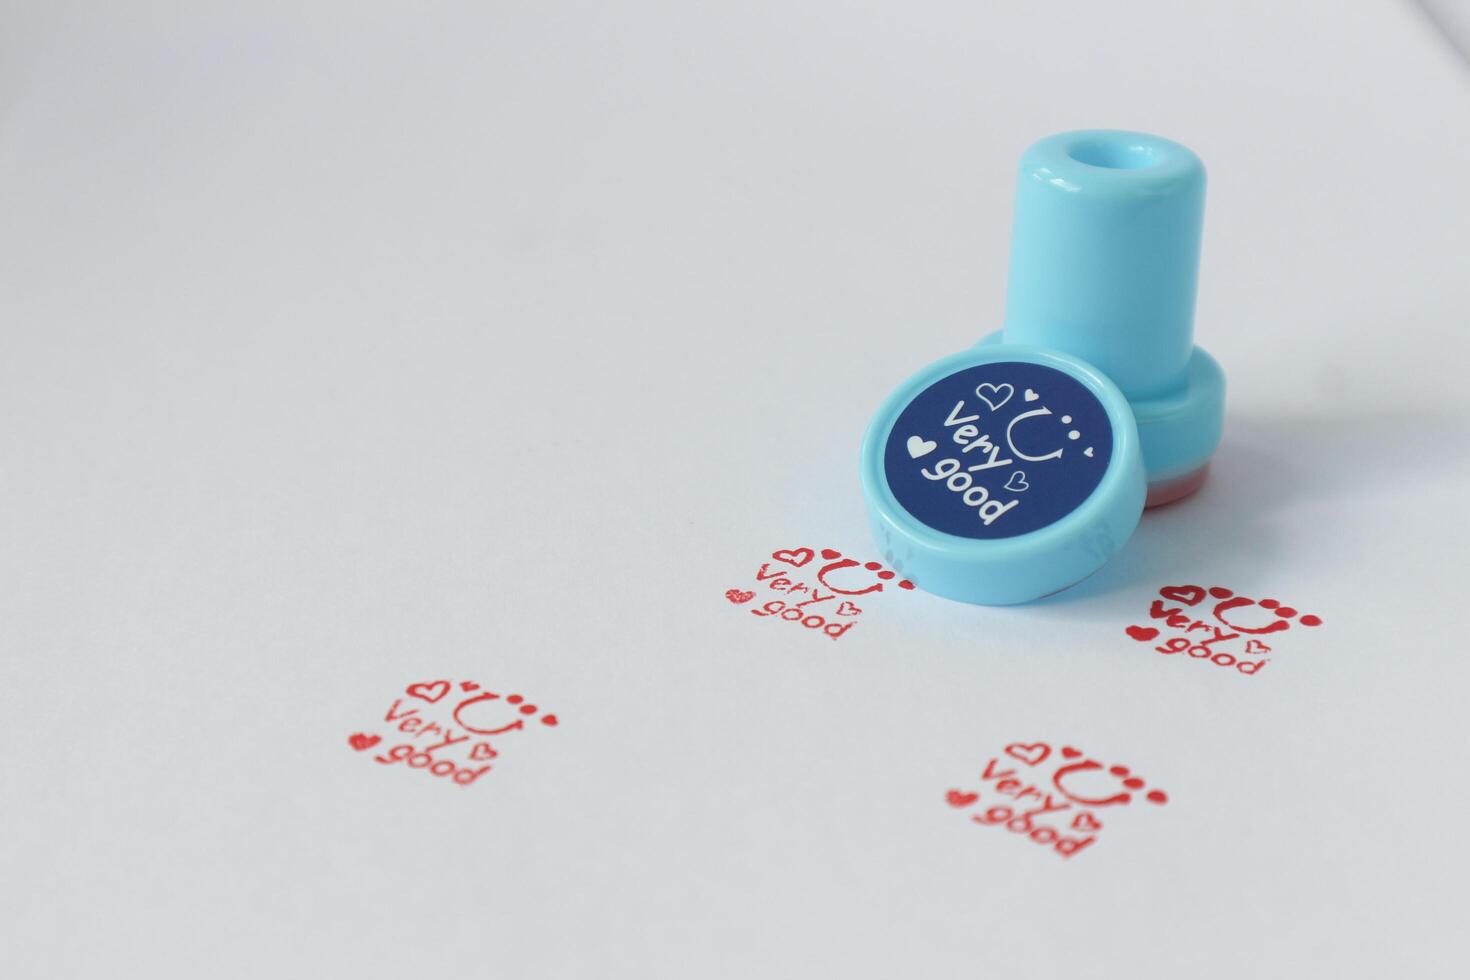 Children's praise stamp illustration, Red Child Friendly Rubber Stamp Seal Vector photo